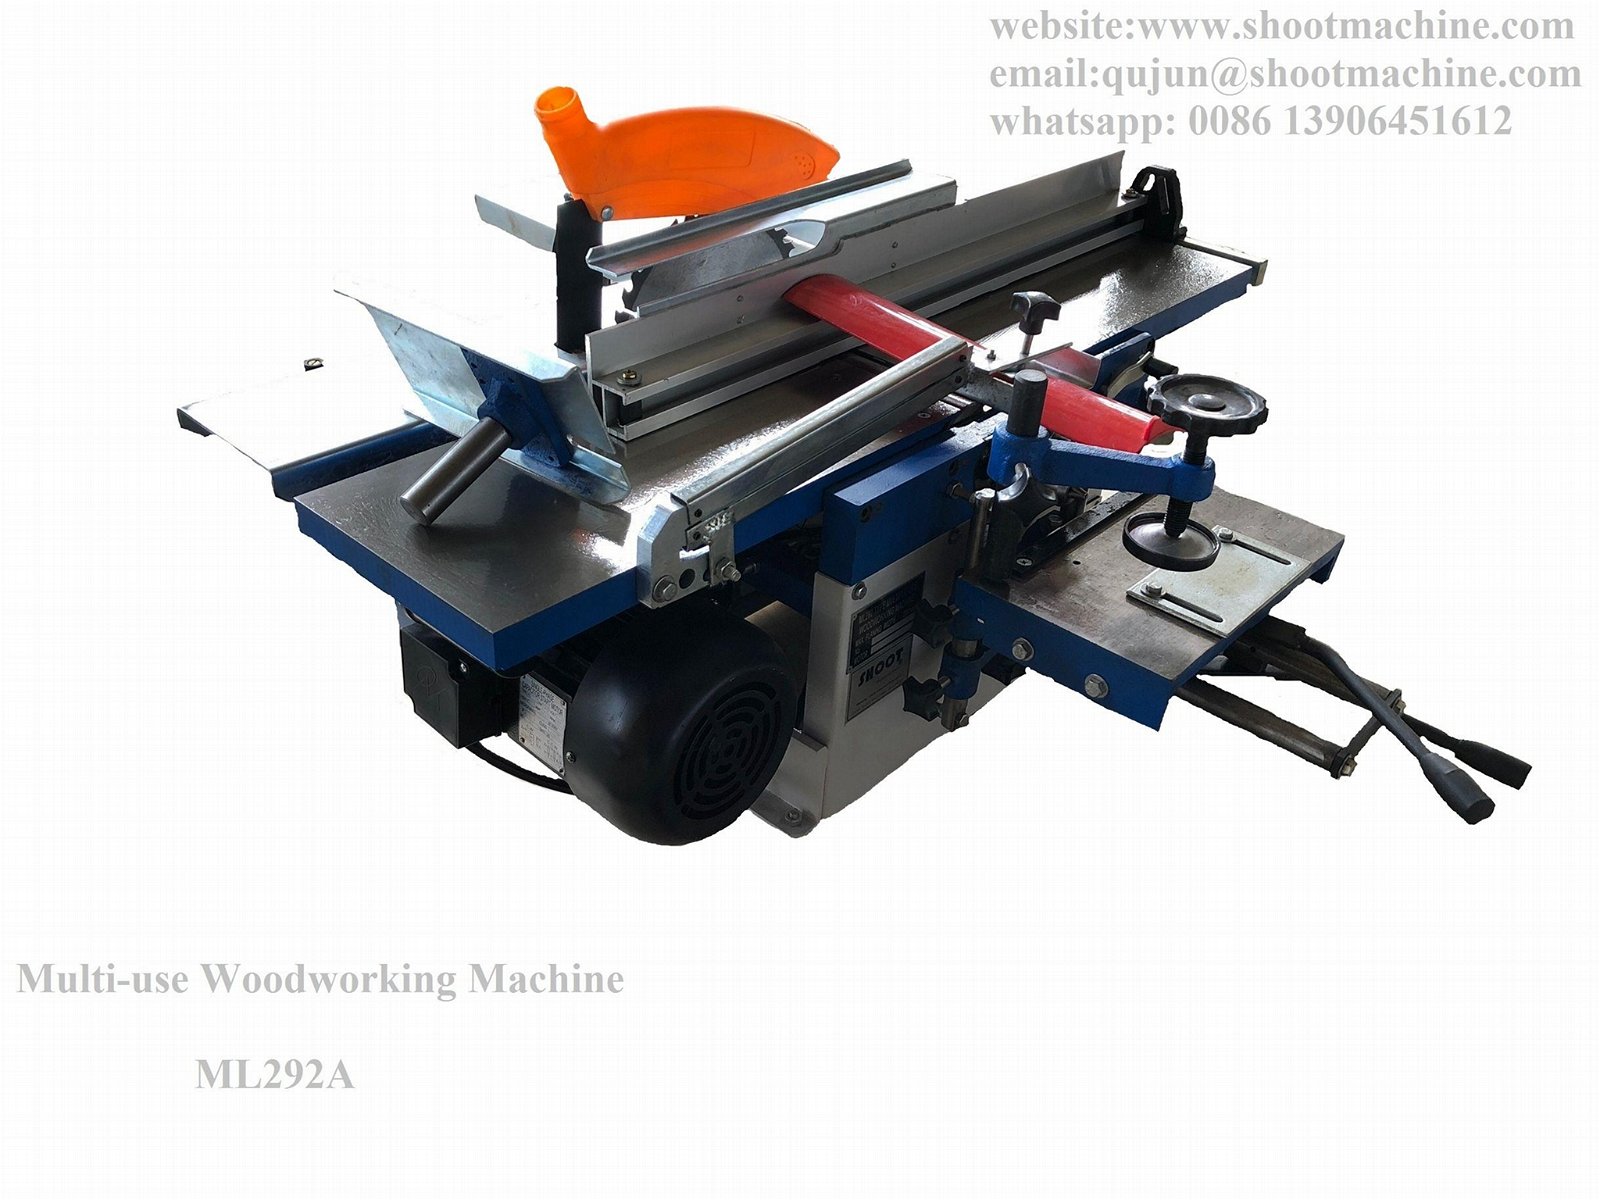 Combine Woodworking Machine,ML292A1 2